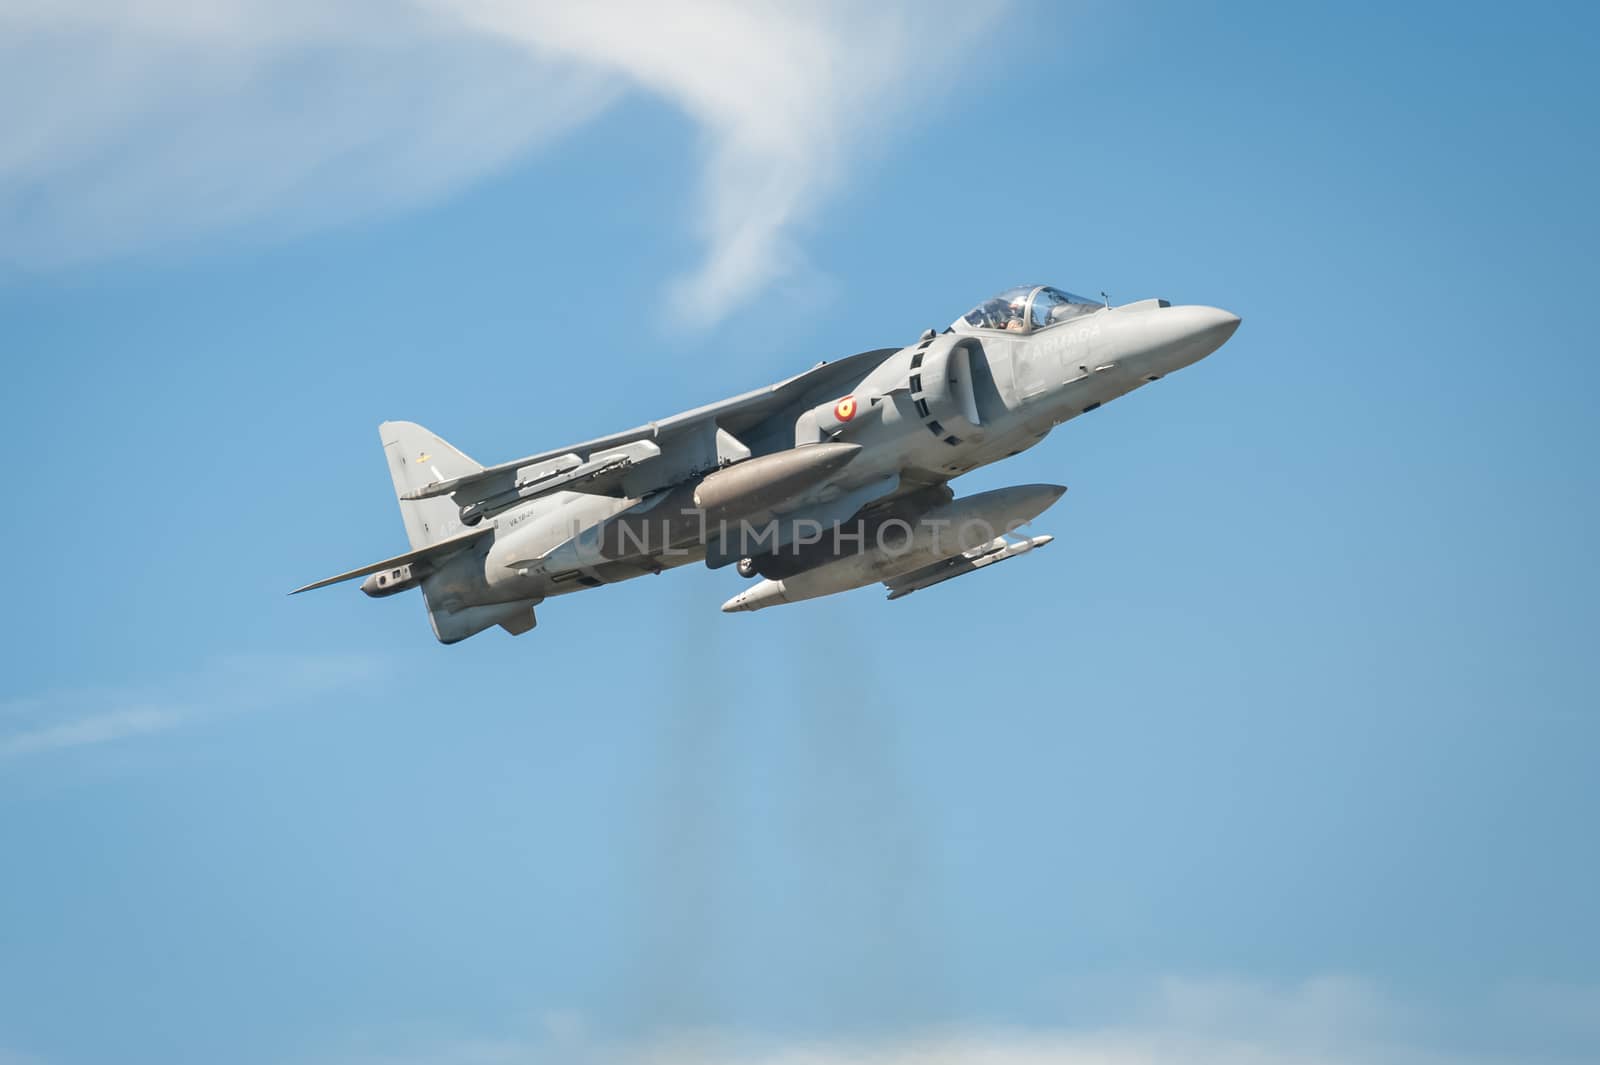 Farnborough, UK - July 18, 2014: A Spanish navy Harrier jump jet performing a vertical thrust hover maneuver near Farnborough, Hampshire, UK